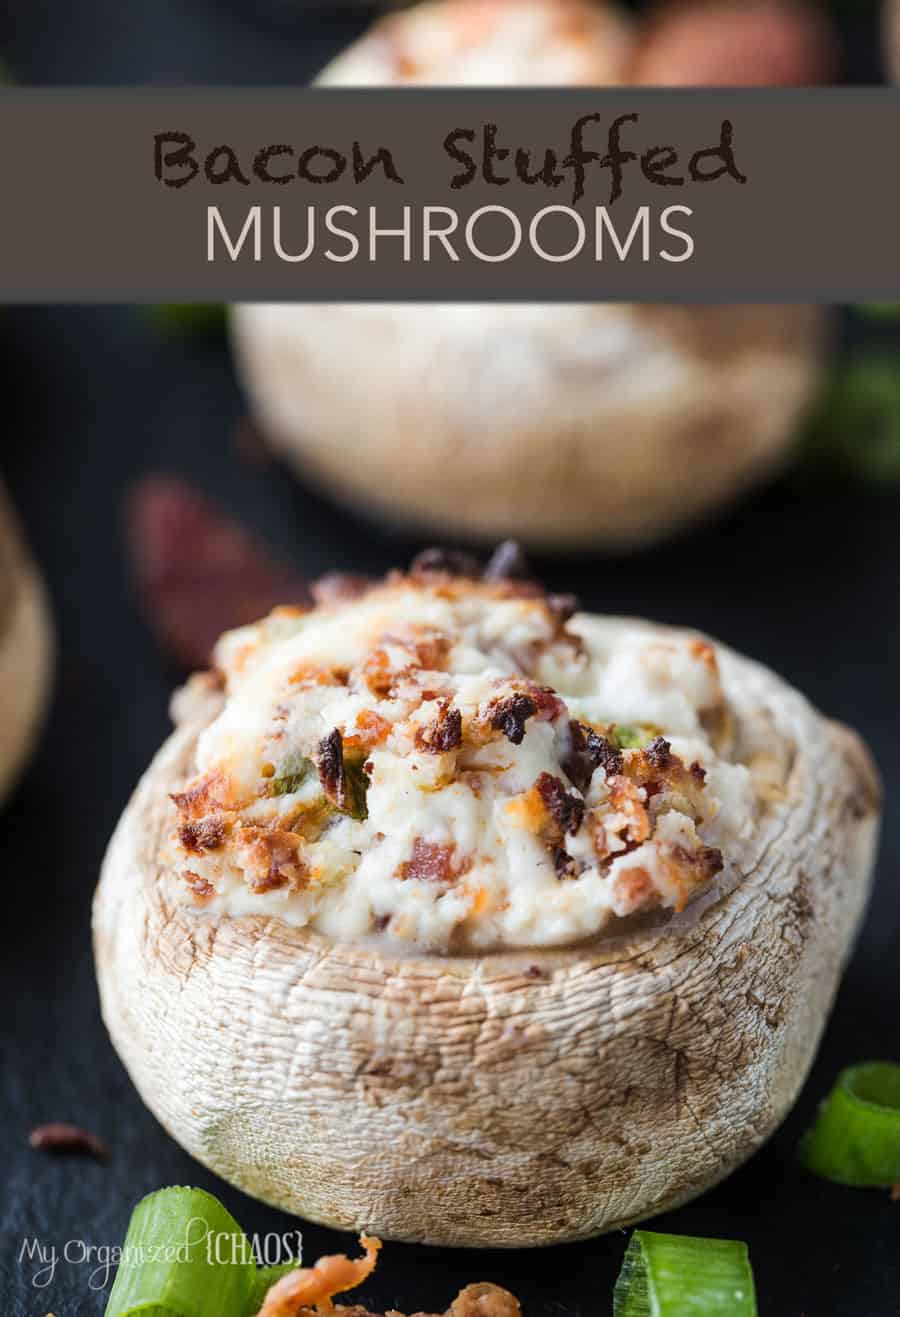 A close up of food, mushrooms